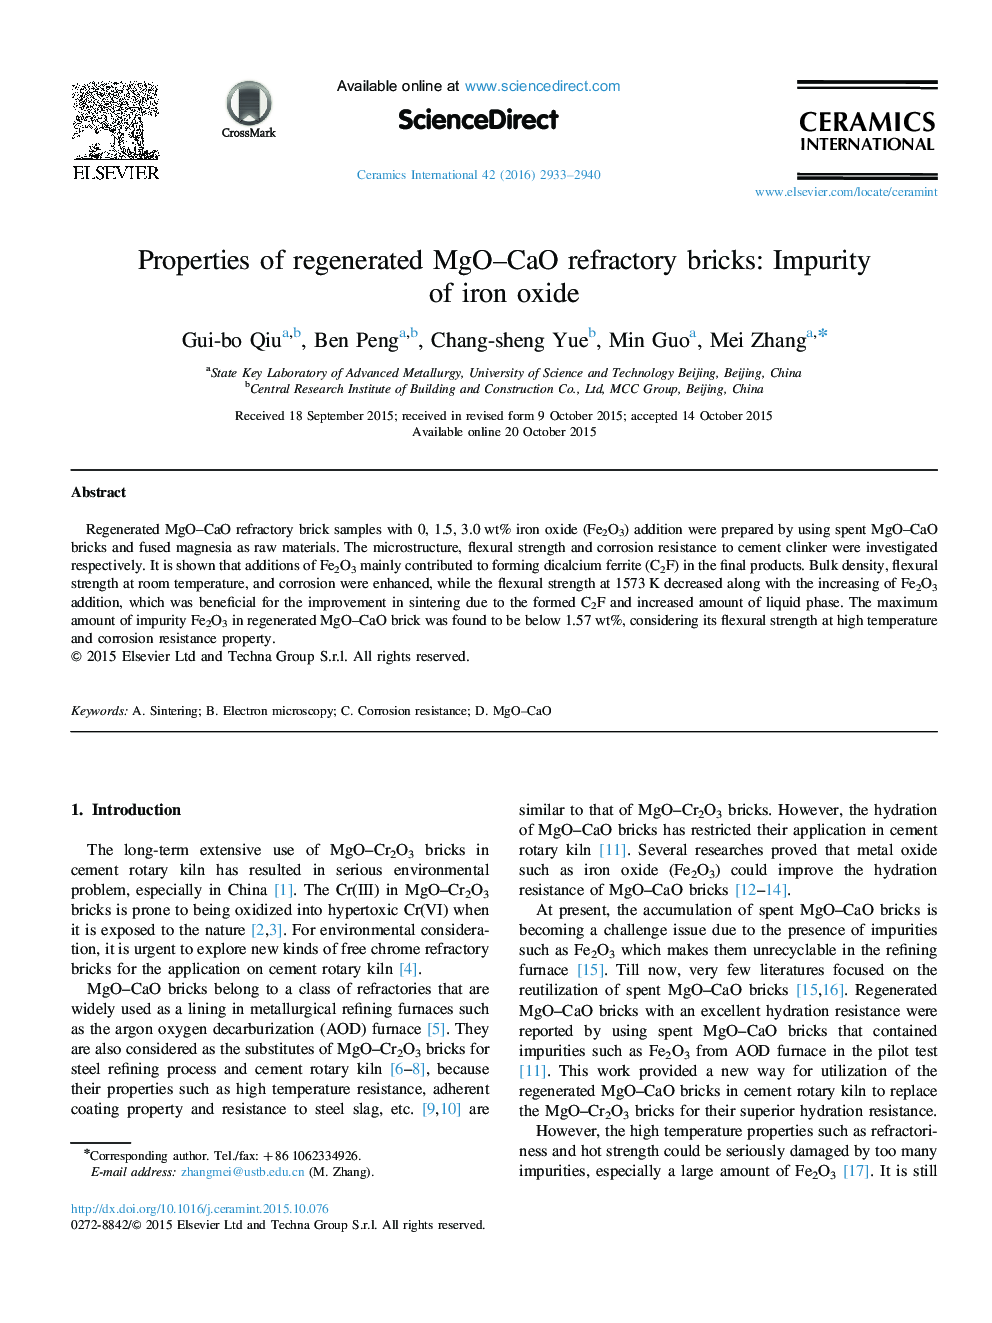 Properties of regenerated MgO–CaO refractory bricks: Impurity of iron oxide